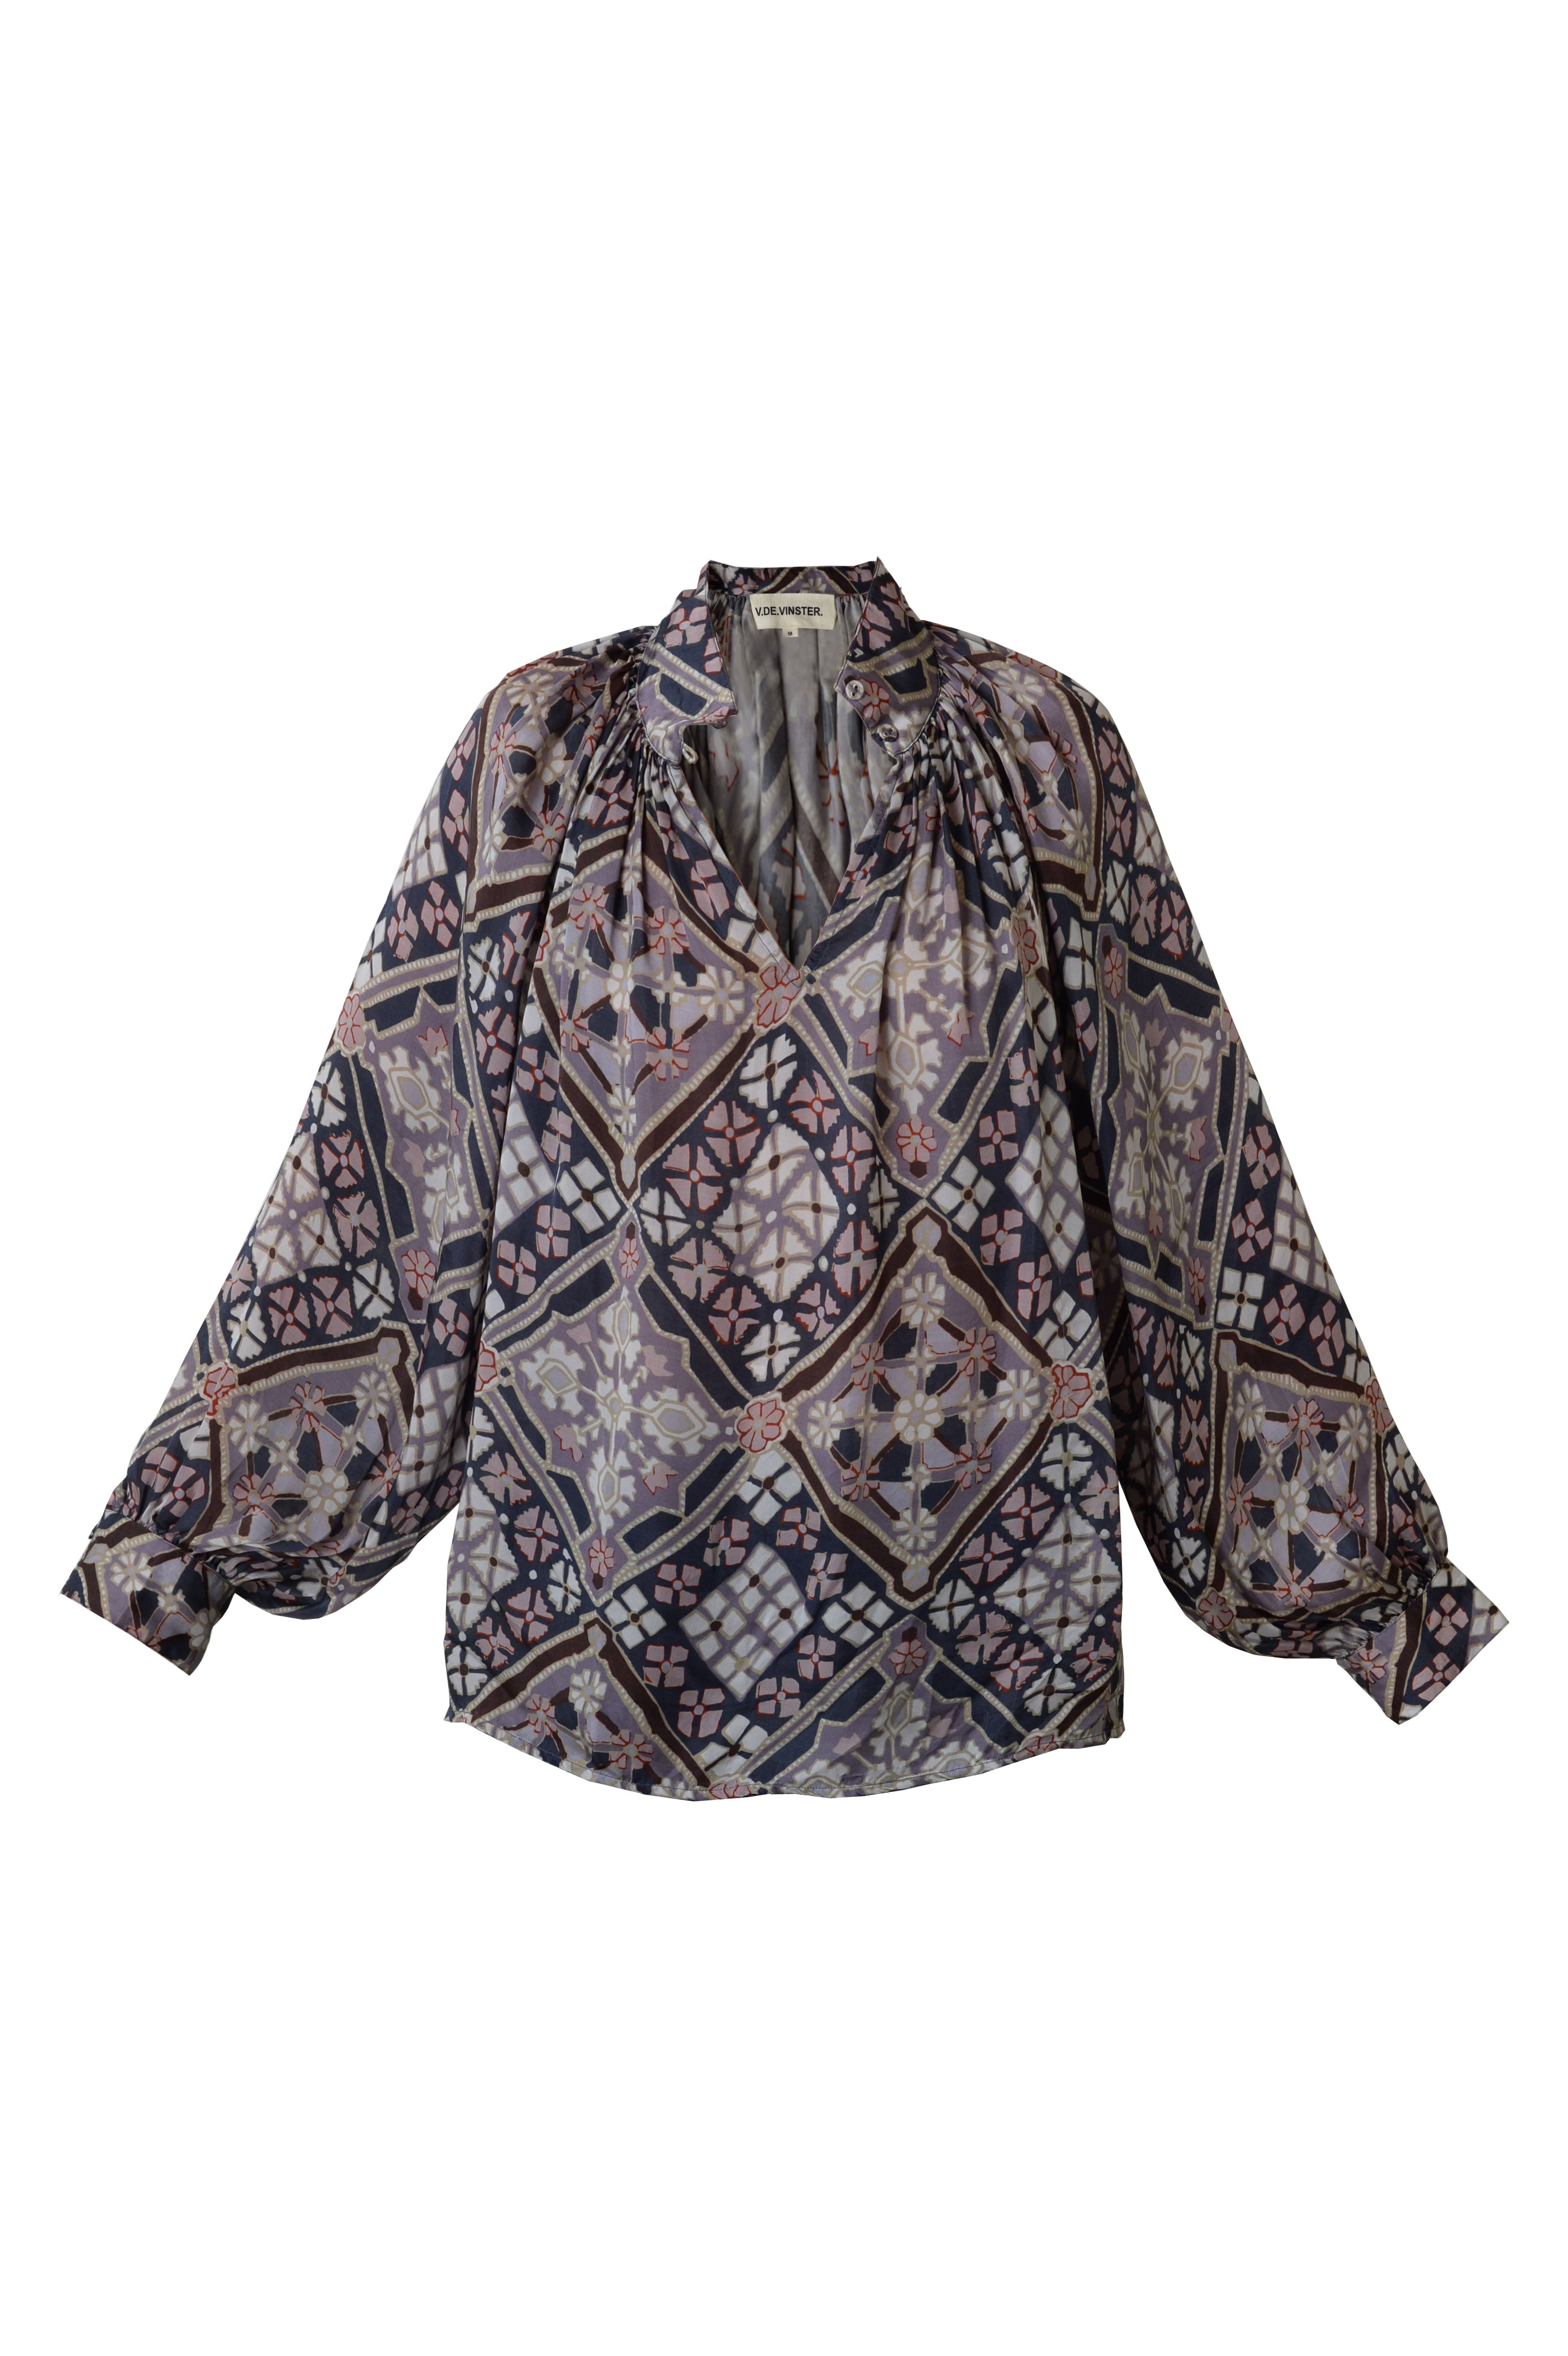 Wild gray Persian print blouse